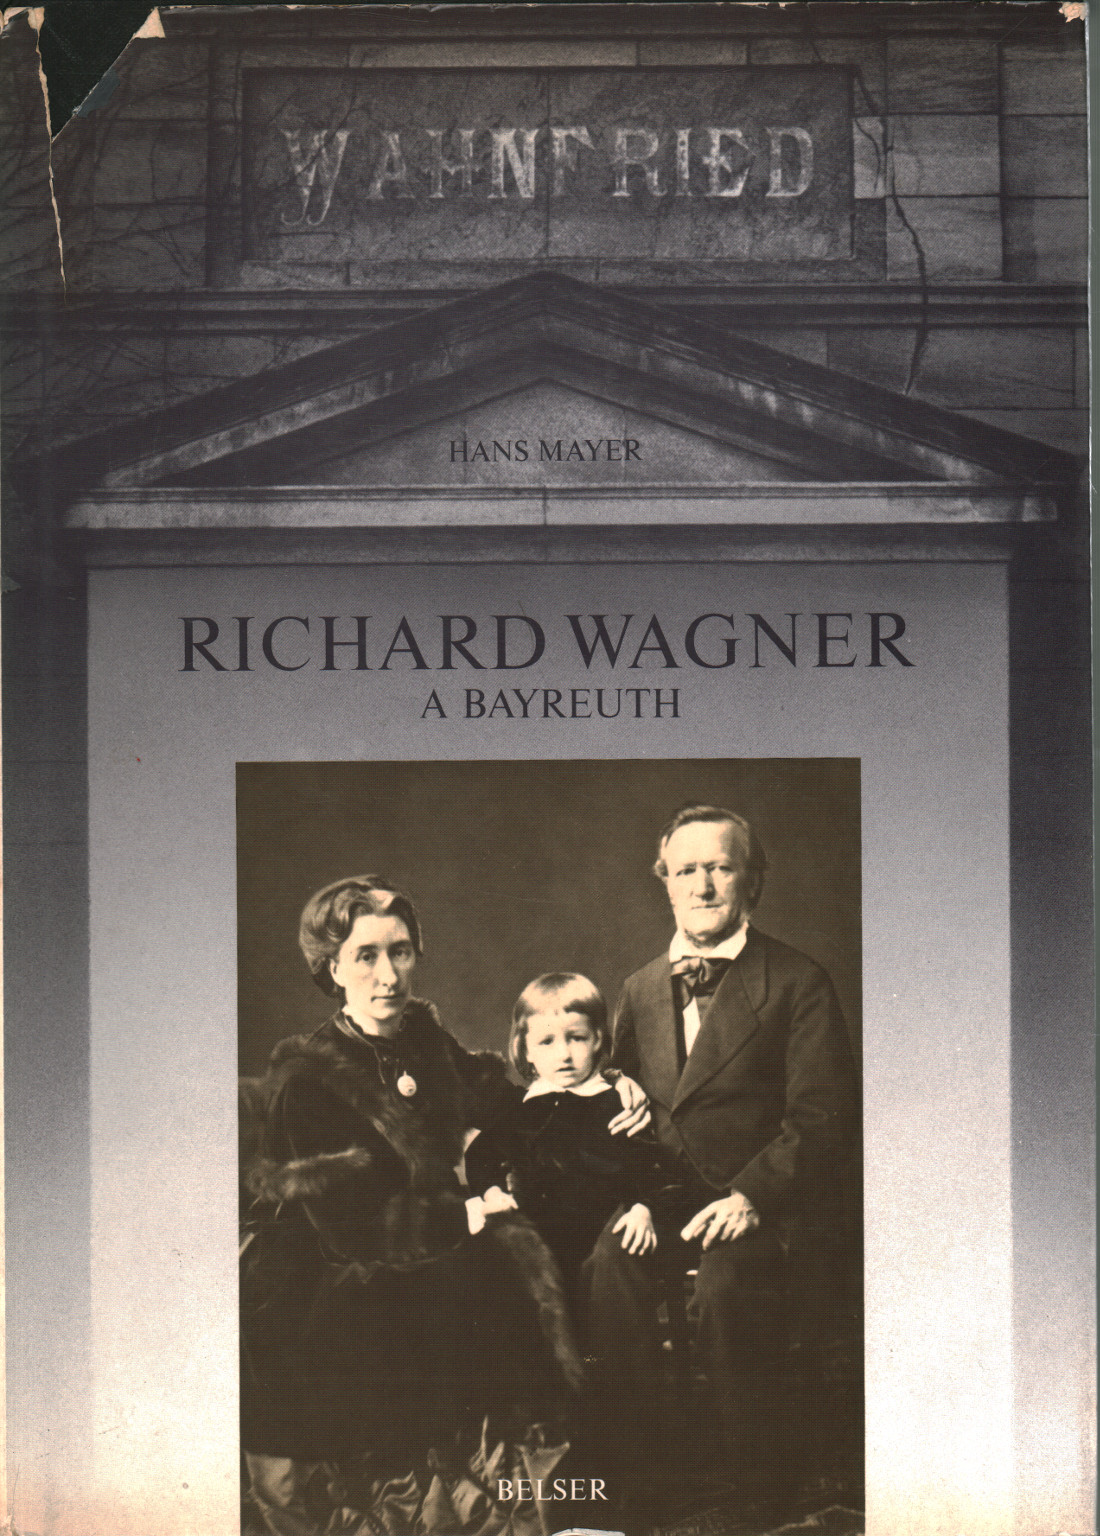 Richard Wagner in Bayreuth, Hans Mayer